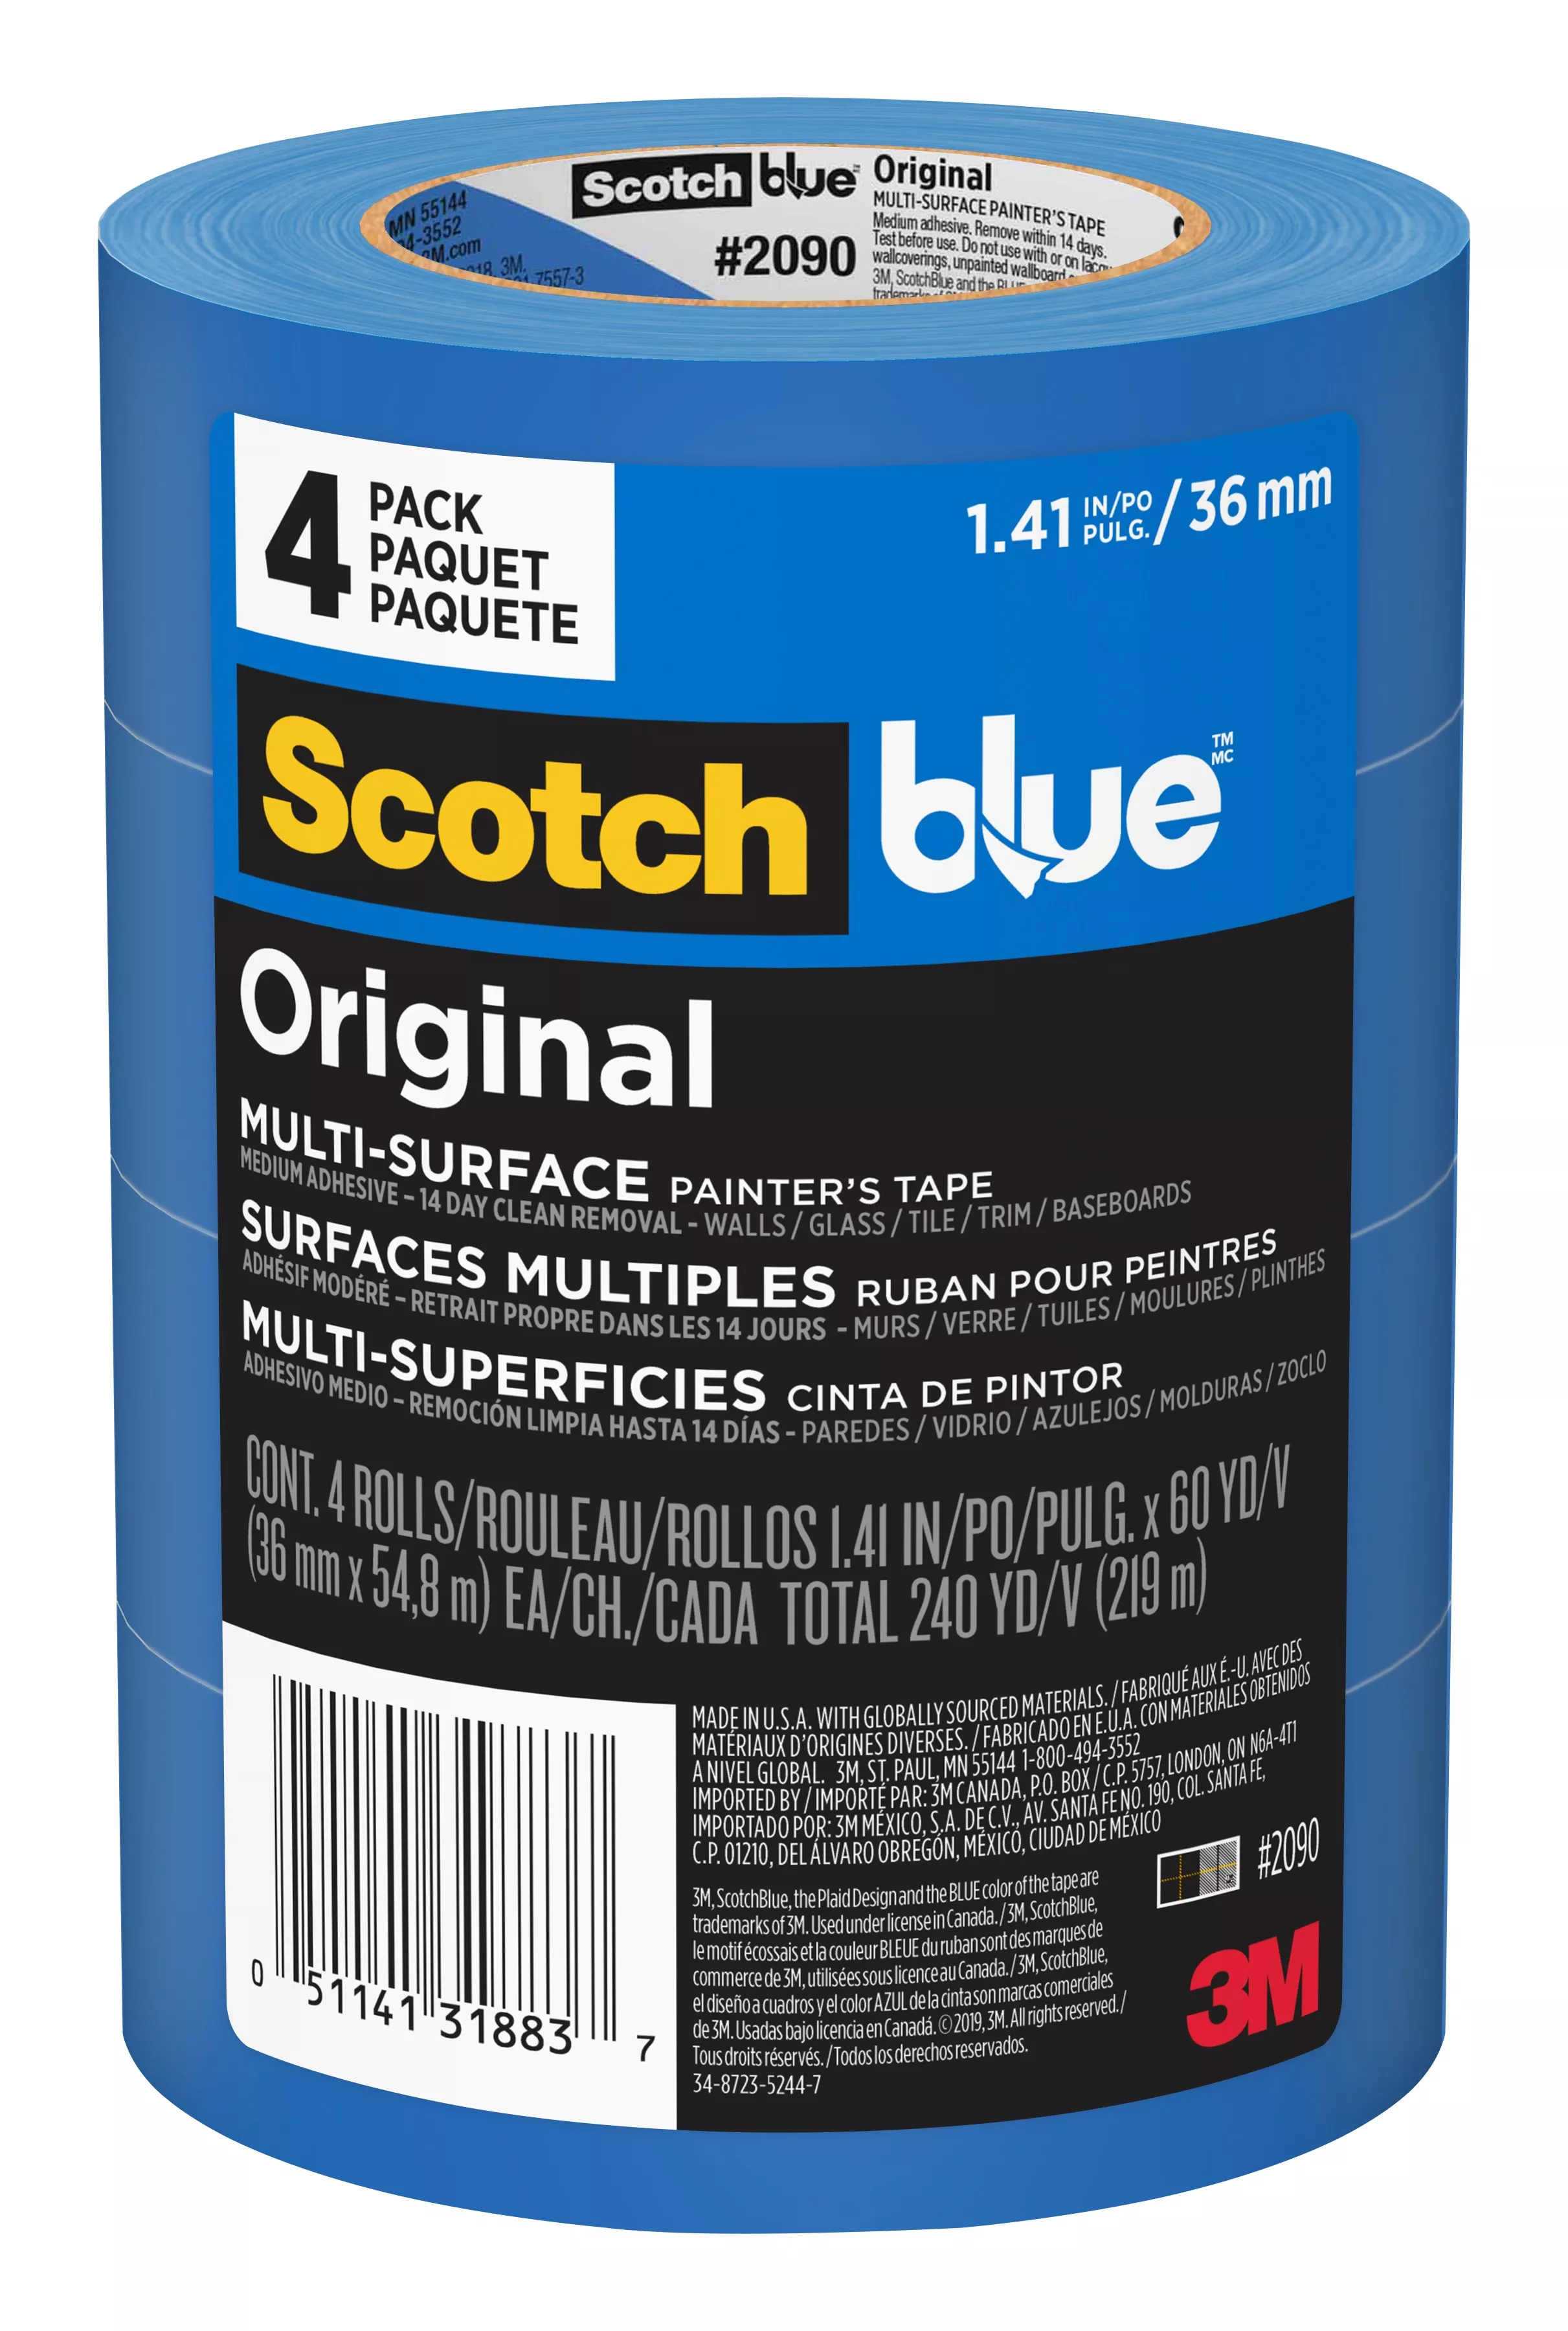 ScotchBlue™ Original Painter's Tape 2090-36EP4, 1.41 in x 60 yd (36mm x
54,8m), 4 rolls/pack